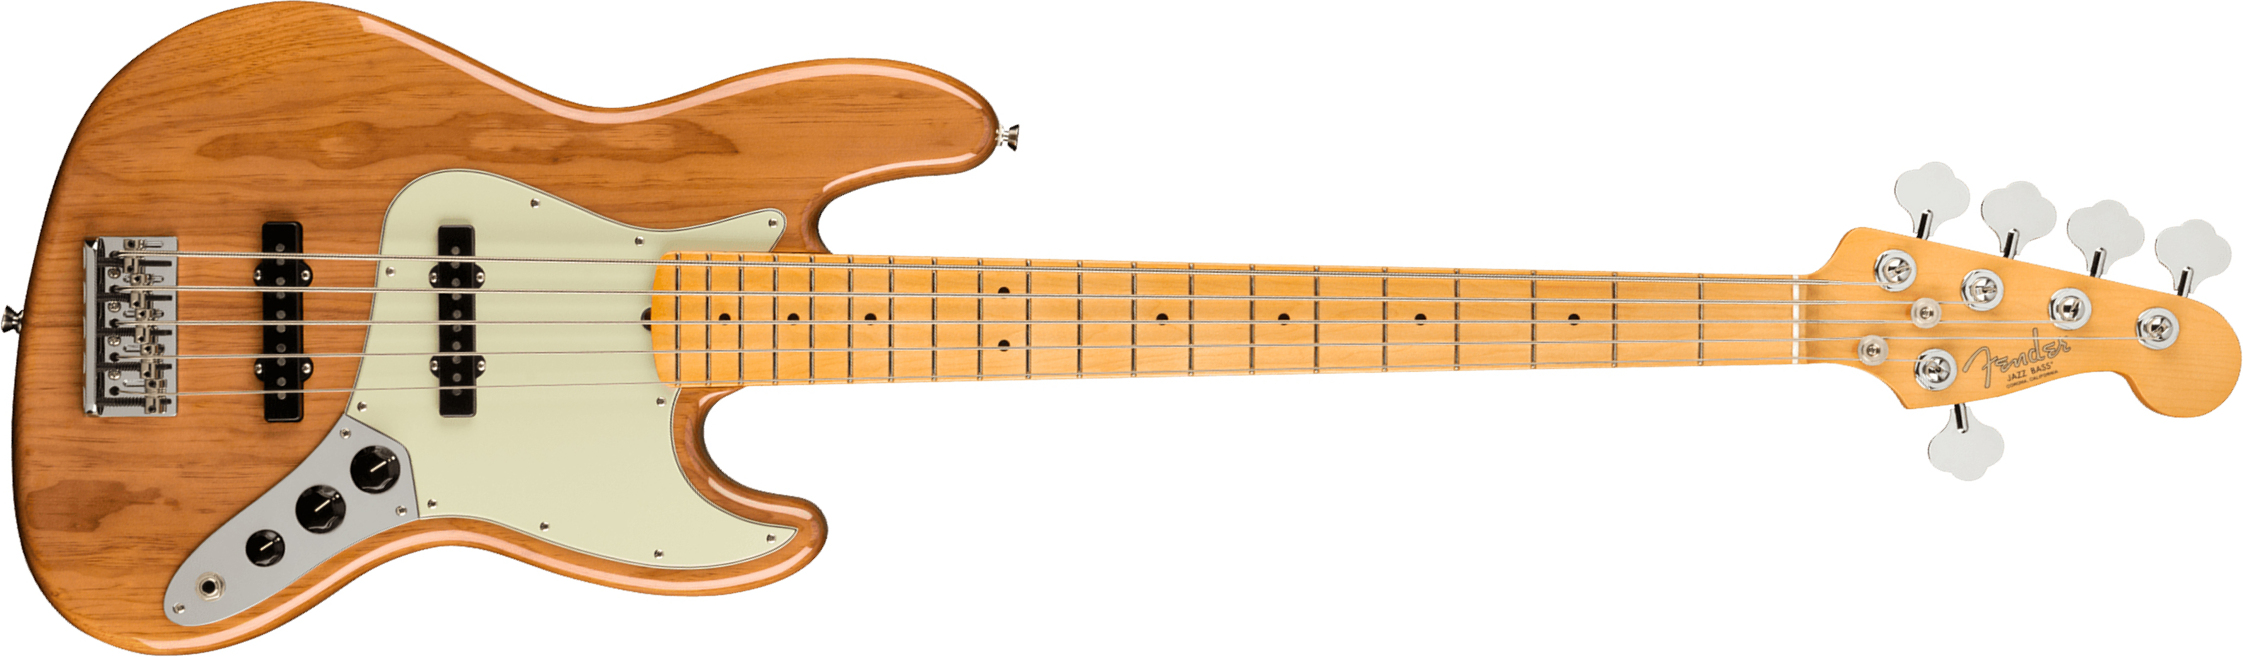 Fender Jazz Bass V American Professional Ii Usa 5-cordes Mn - Roasted Pine - Bajo eléctrico de cuerpo sólido - Main picture